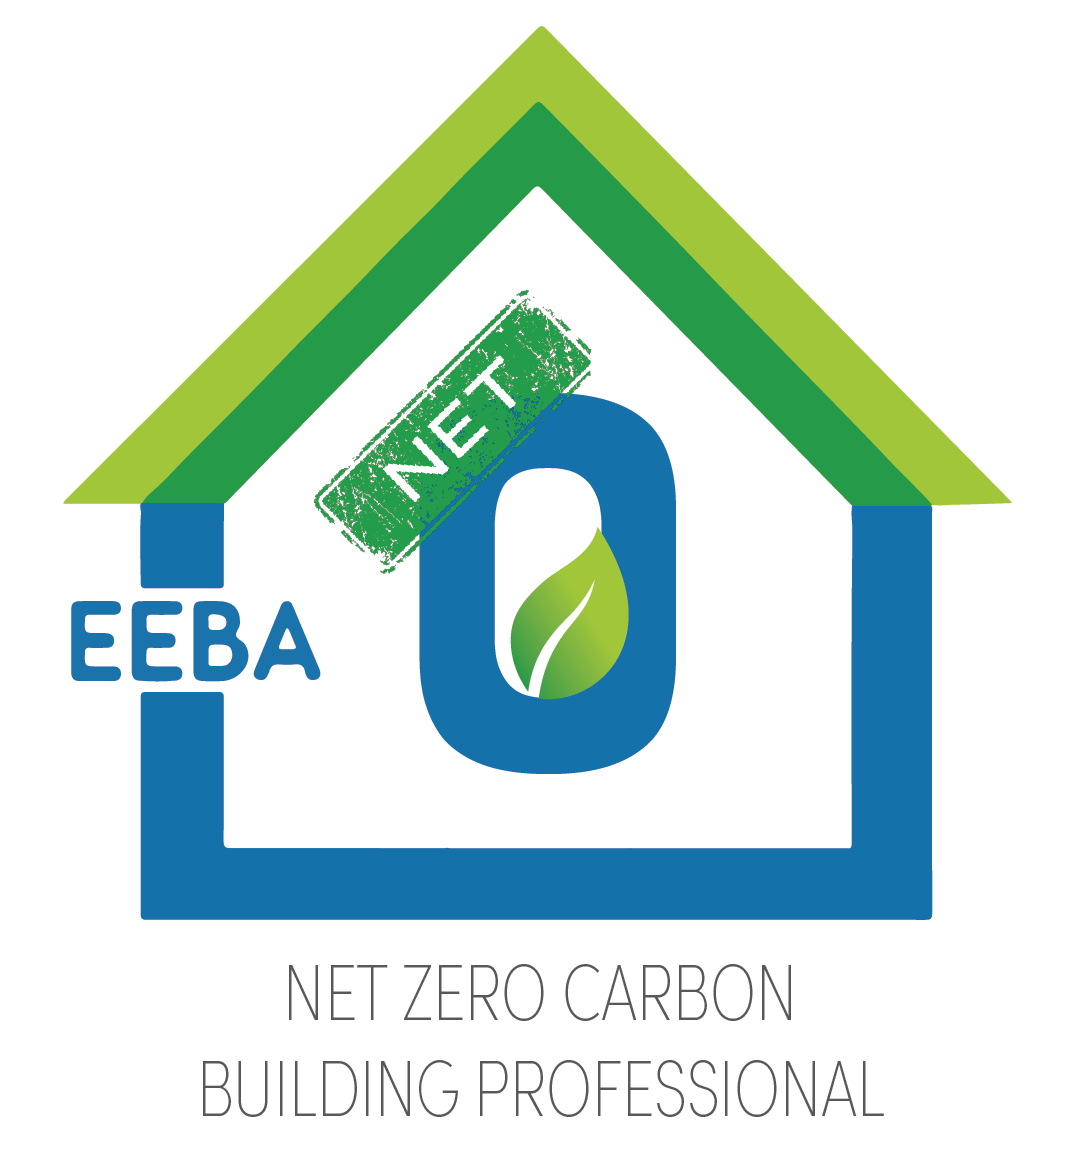 EEBA Net Zero Carbon Building Professional Designation